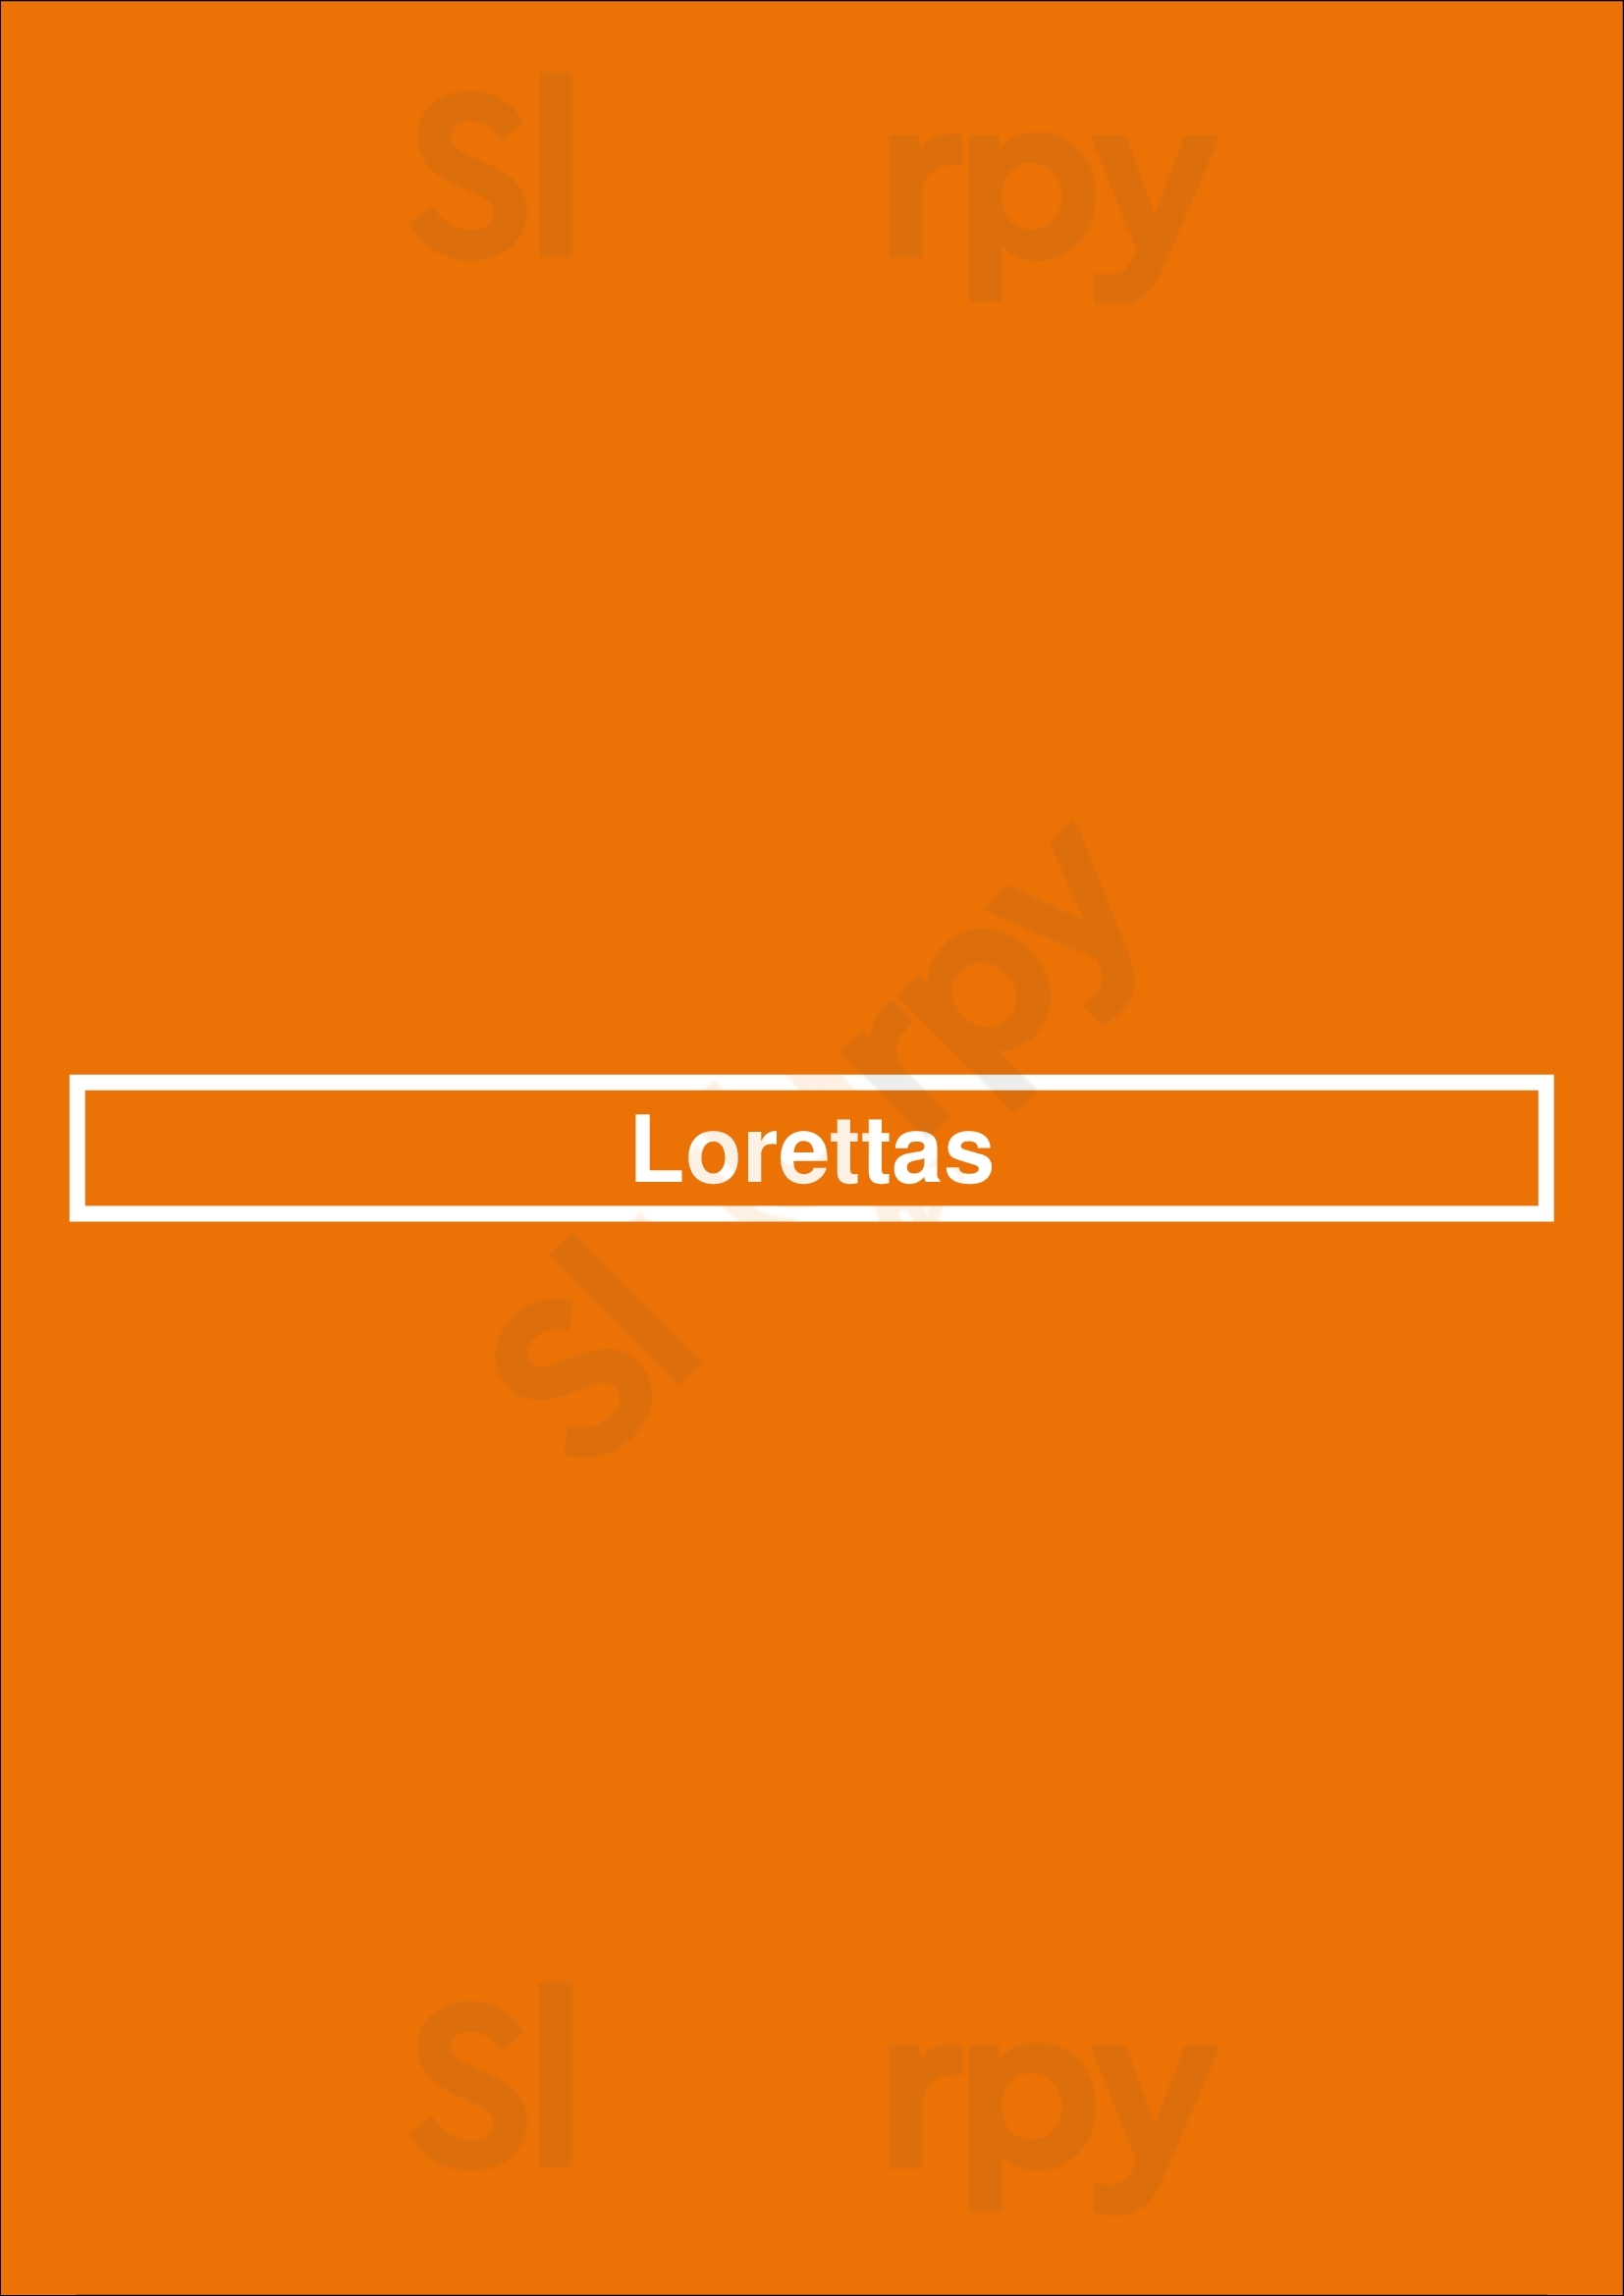 Loretta's Dublin Menu - 1